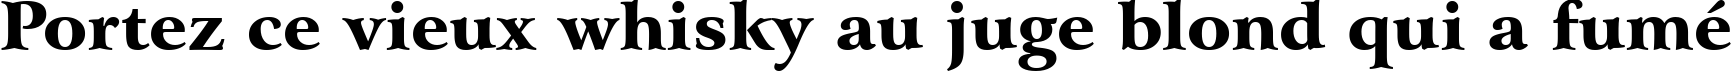 Пример написания шрифтом Bitstream Arrus Black BT текста на французском